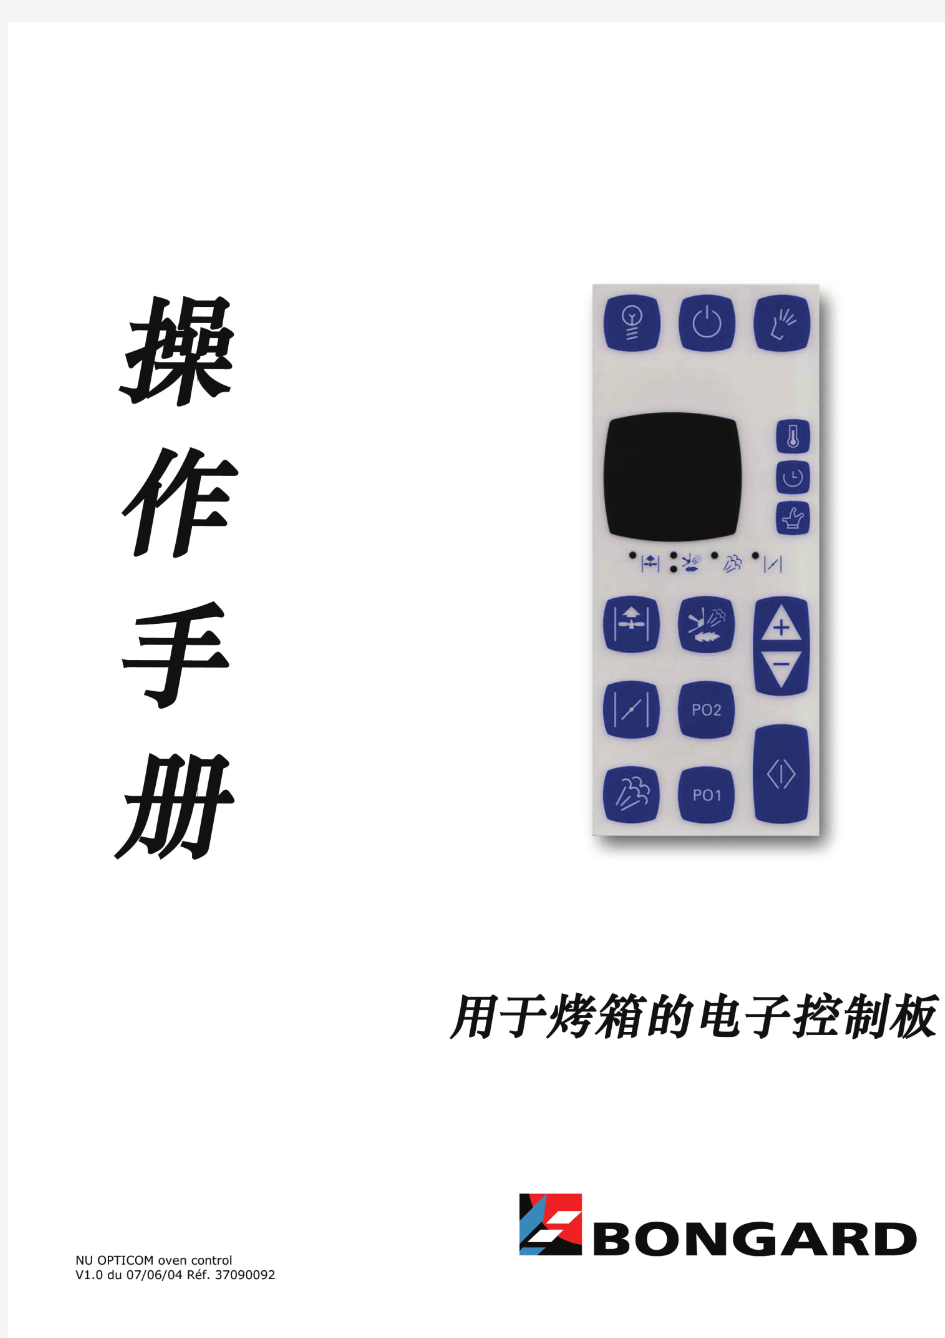 BONGARD电层烤箱控制板操作手册(中文)